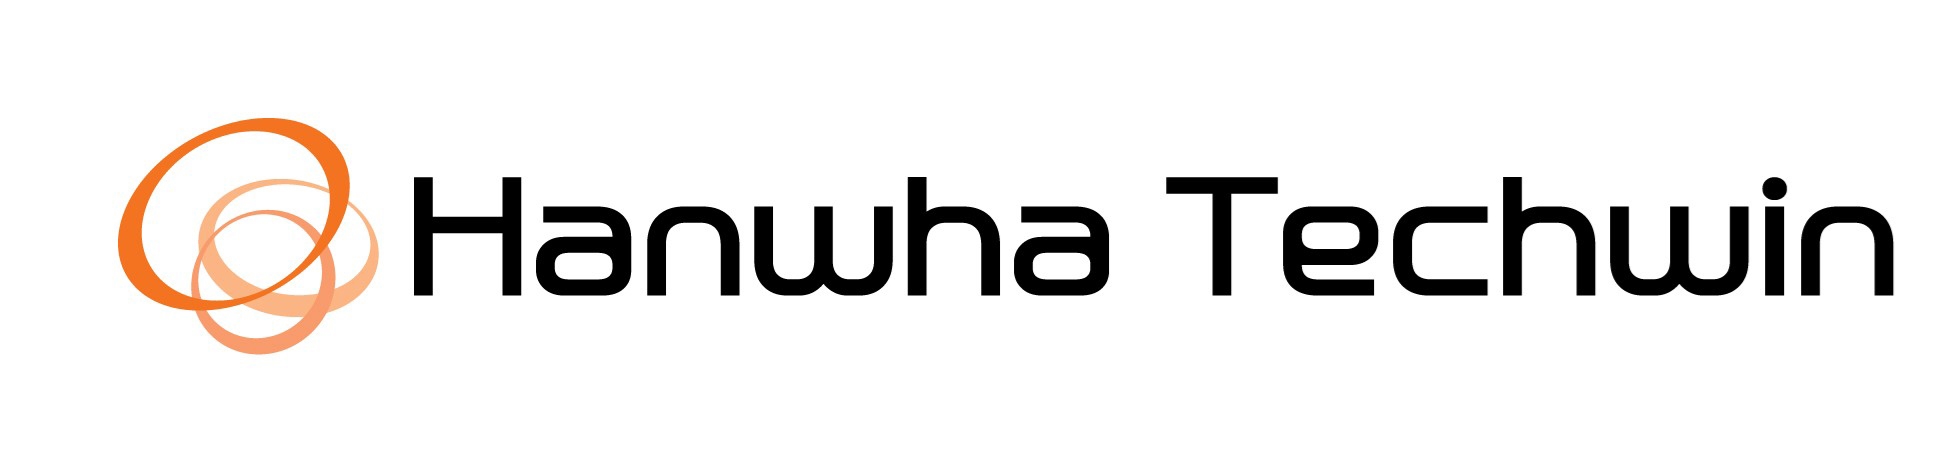 Hanwha techwin logo .jpeg